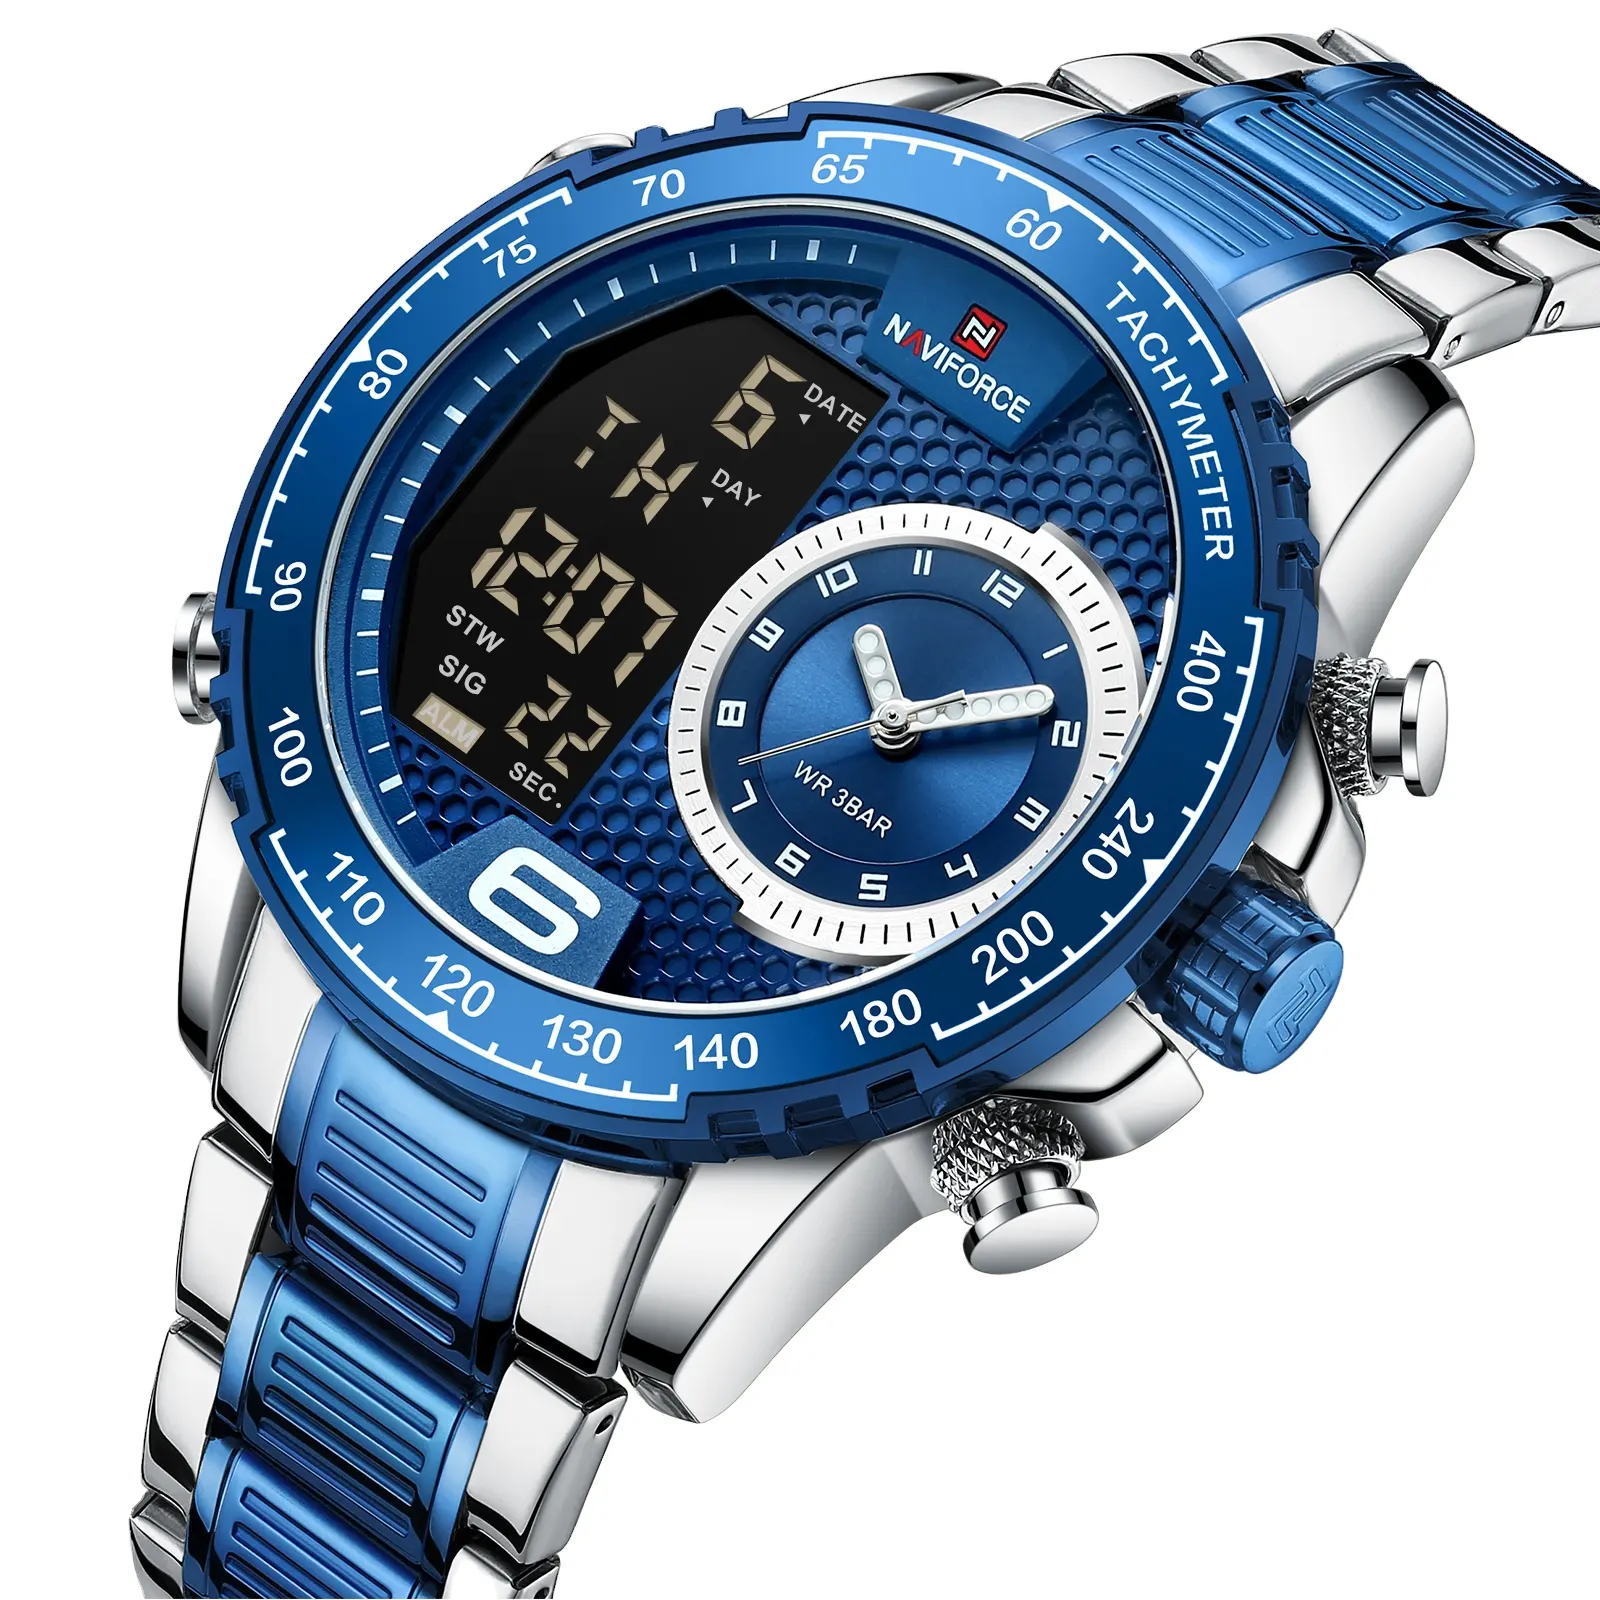 OEM accept NAVIFORCE 9199 High Quality New Men's Quartz Watch Sport Business Steel Band Watch Digital Watch Waterproof Reloj